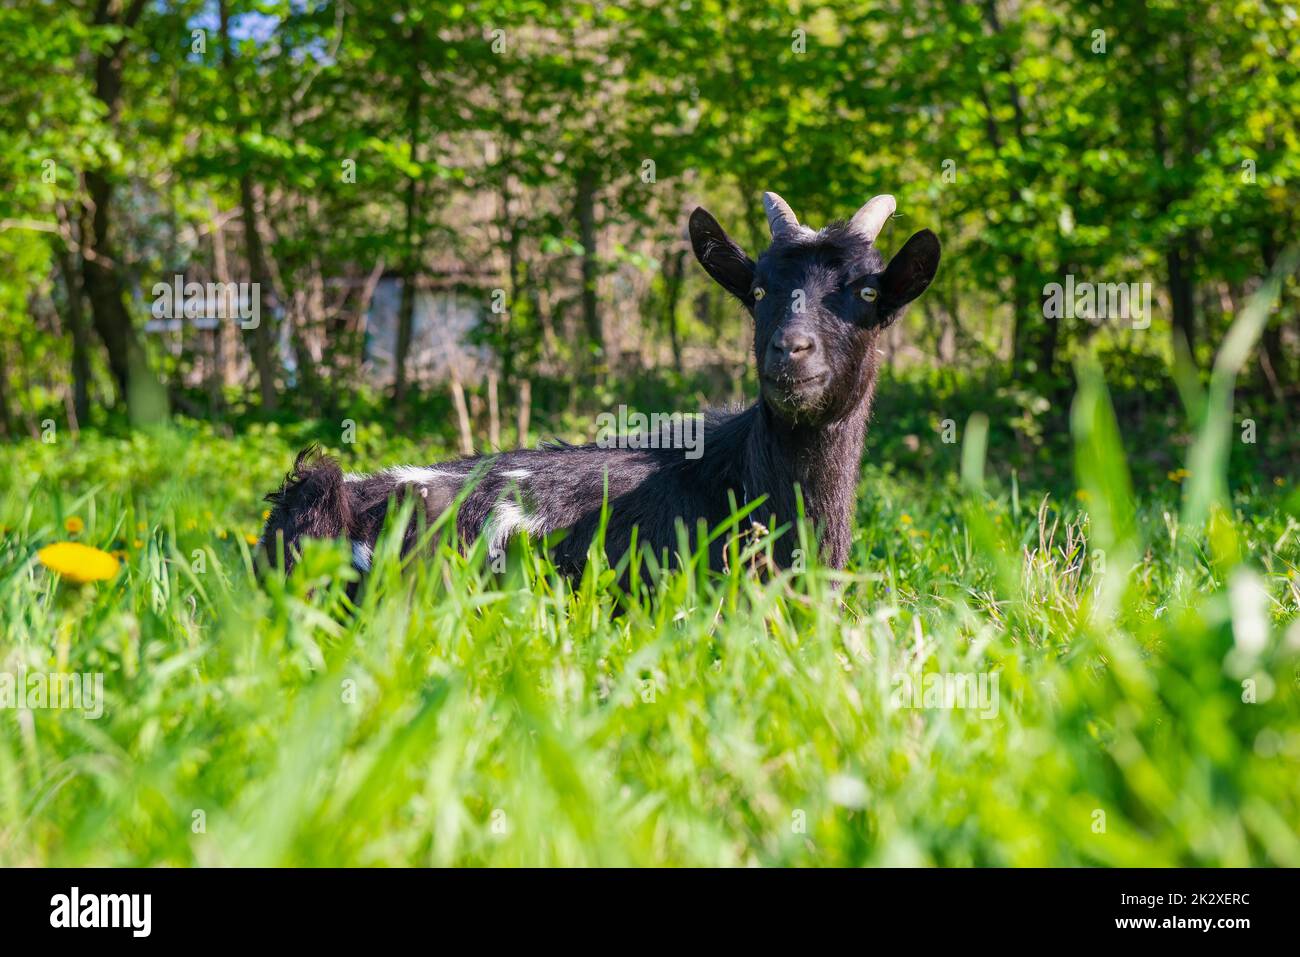 Black goat in grass Stock Photo